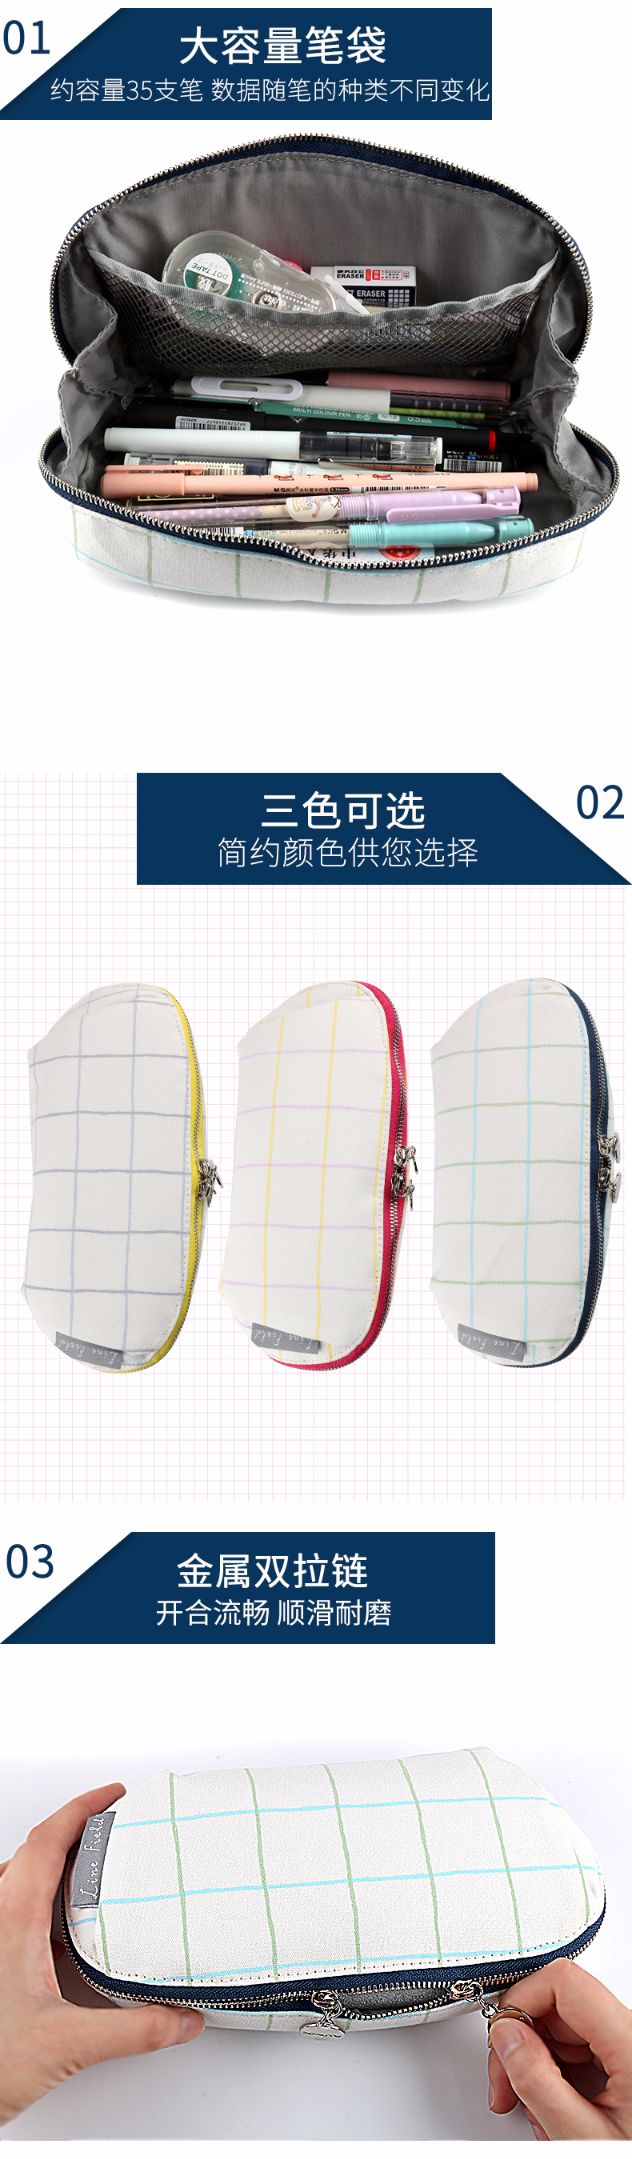 KOKUYO/国誉WSG-PCL12 格子印象笔袋 中号详情图6